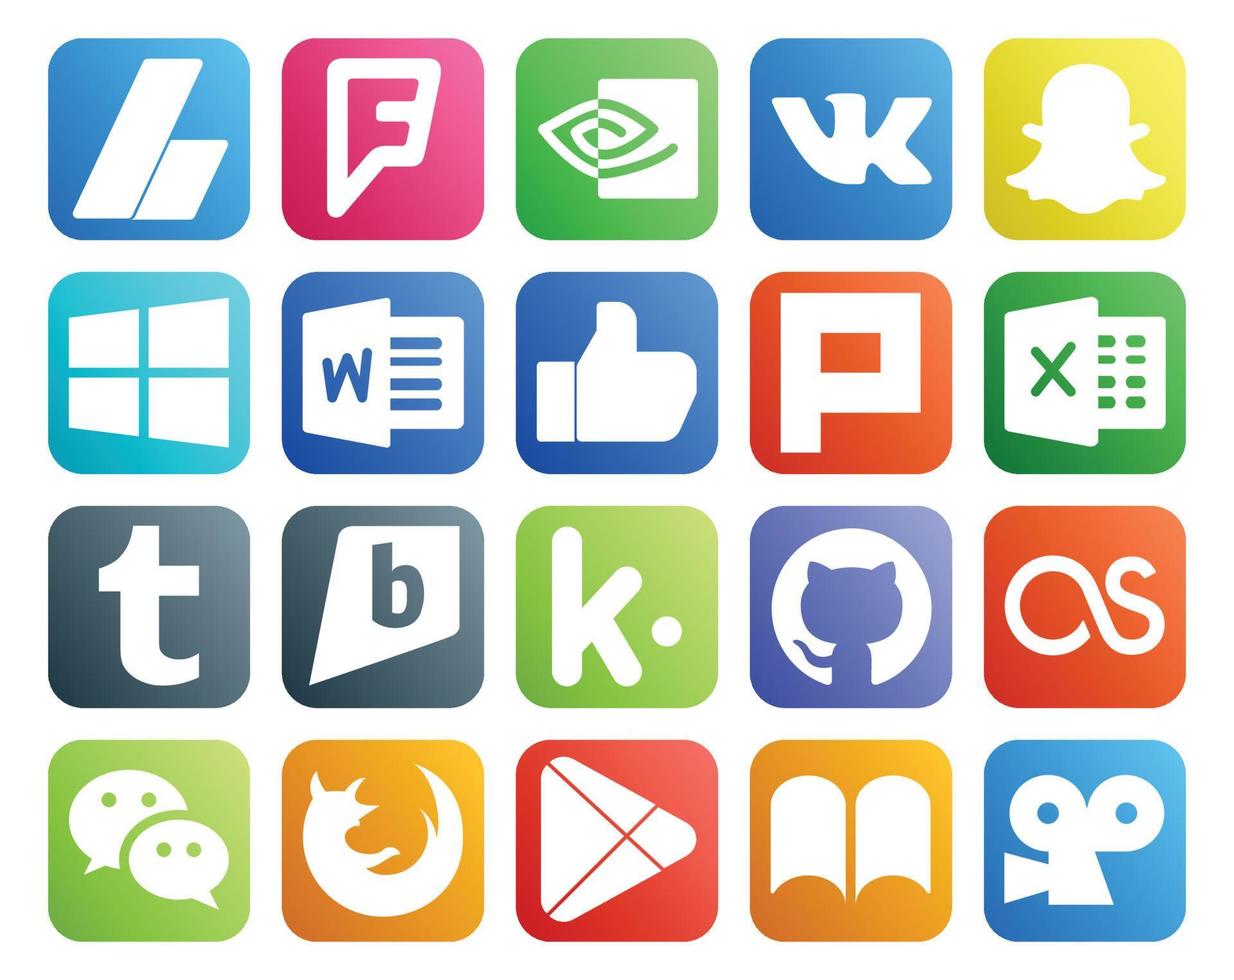 20 Social Media Icon Pack inklusive Messenger Lastfm wie Github Brightkite vektor